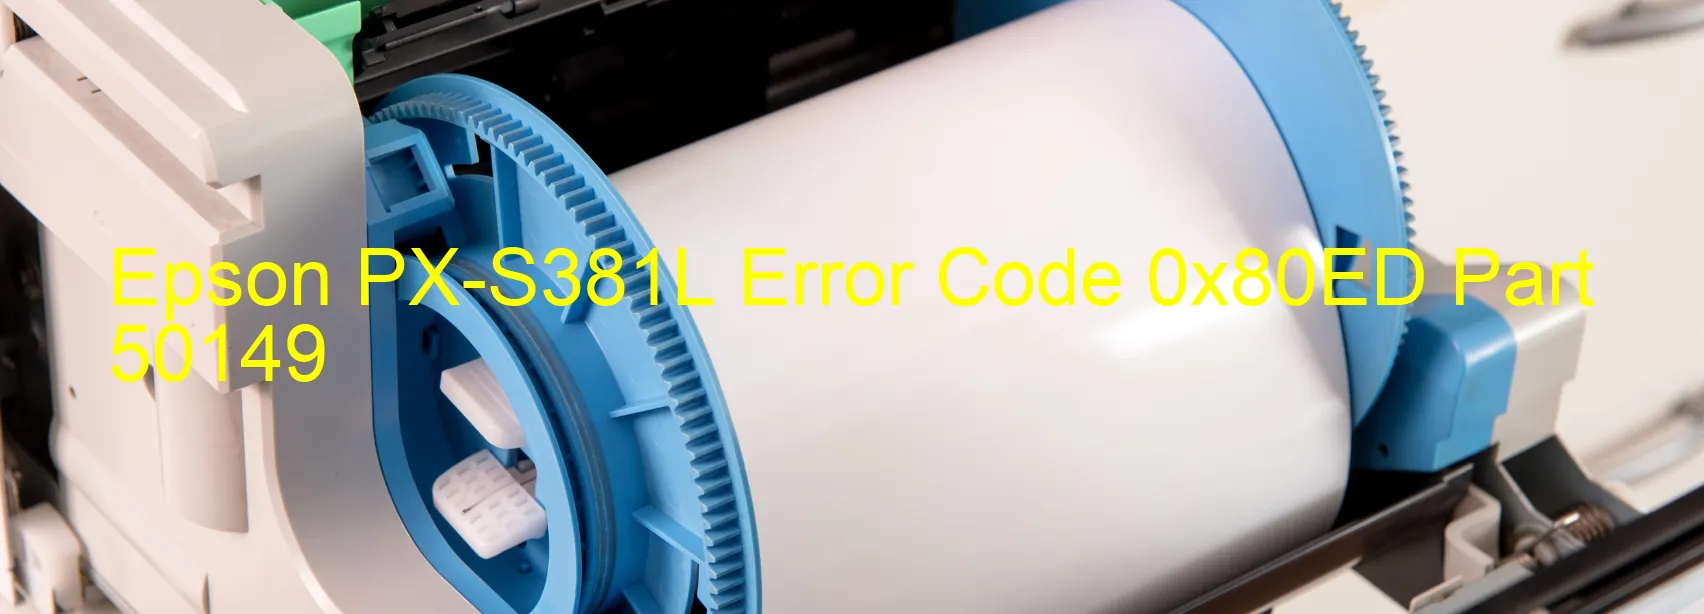 Epson PX-S381L Error Code 0x80ED Part 50149